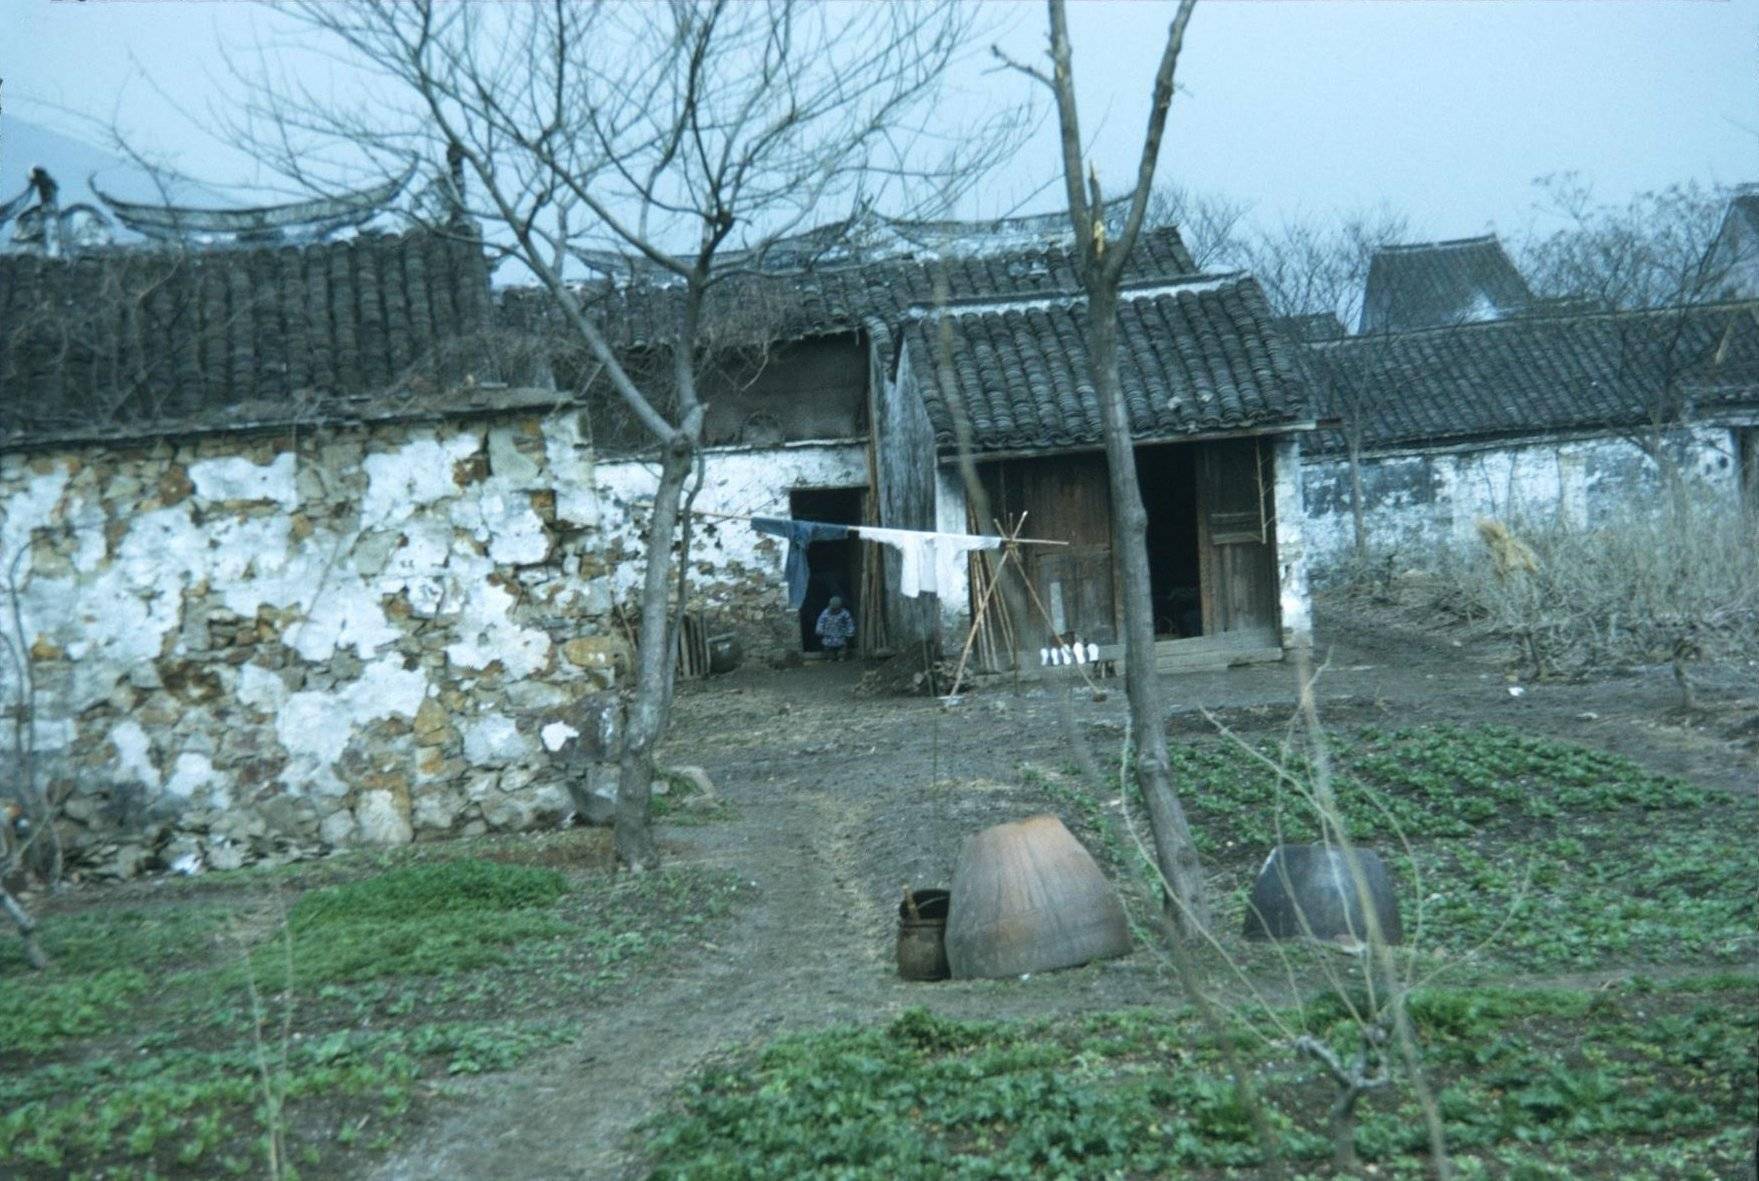 stephen mackinnon拍摄,在郊区农村的一个村落,传统的老房子比比皆是